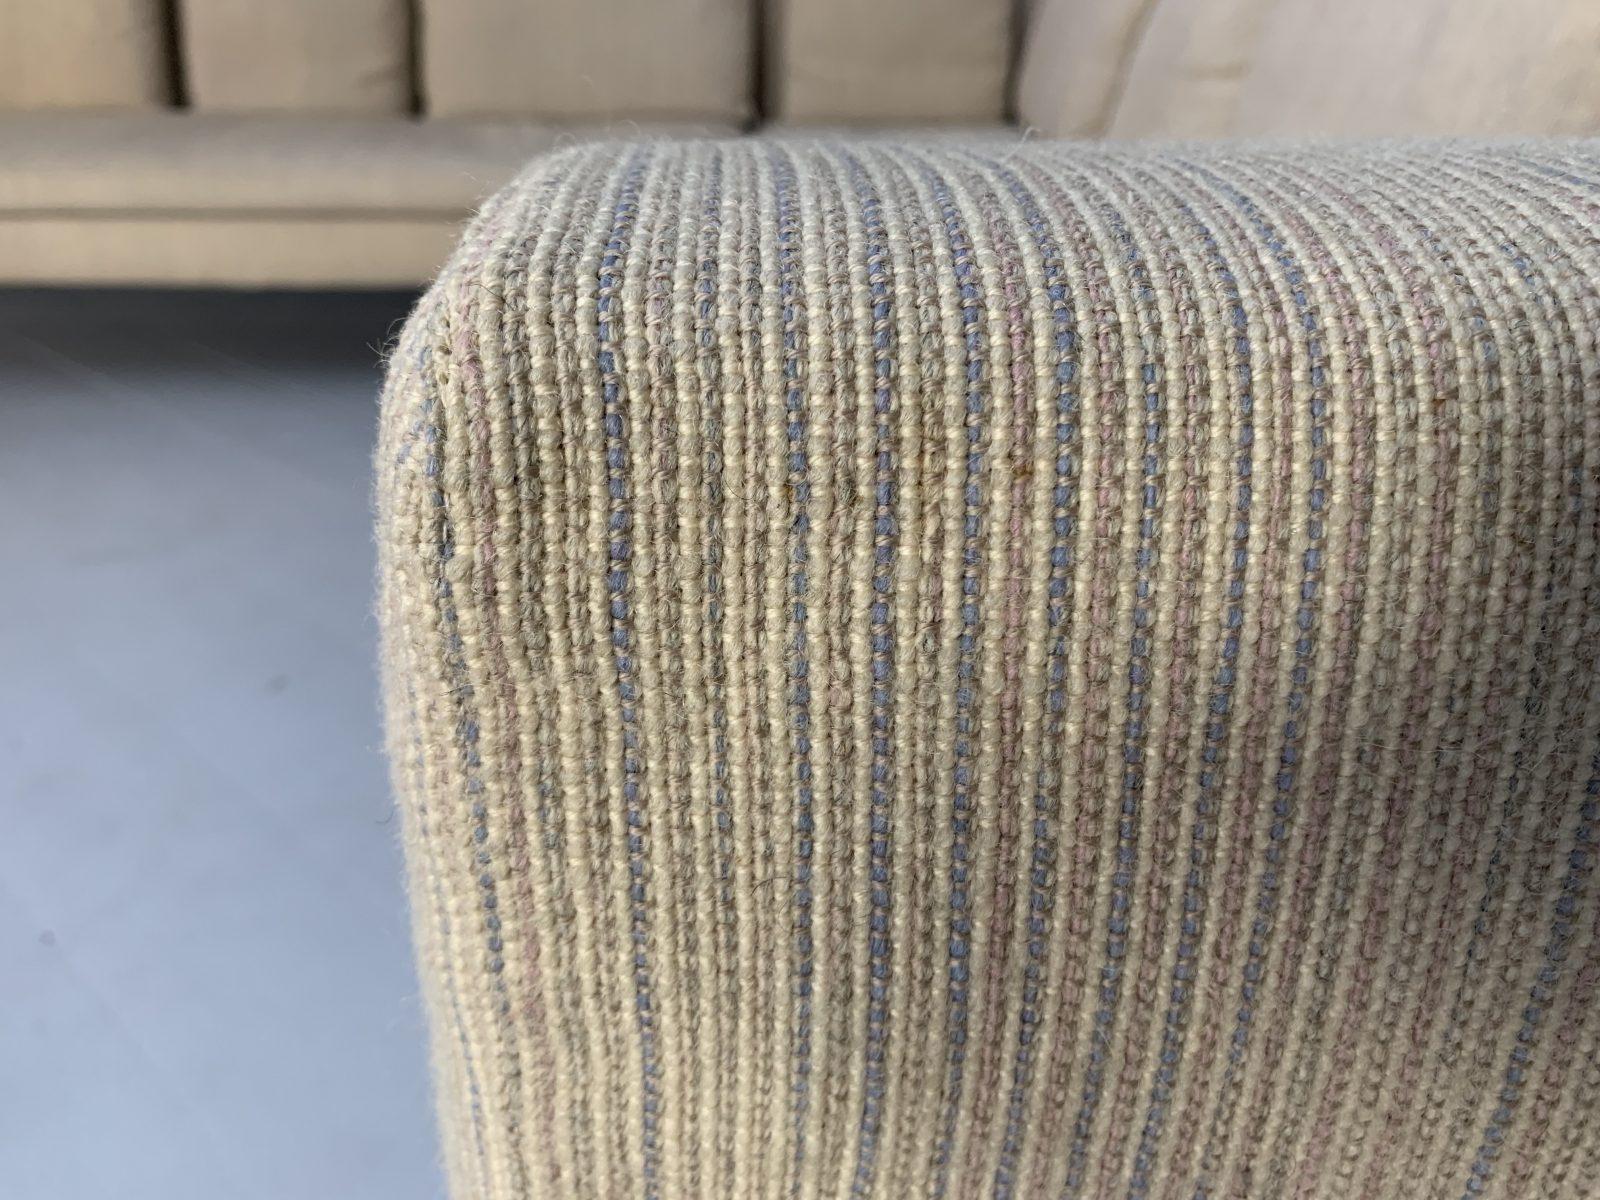 B&B Italia “Charles” L-Shape Sectional Sofa in Stripe Wool For Sale 5